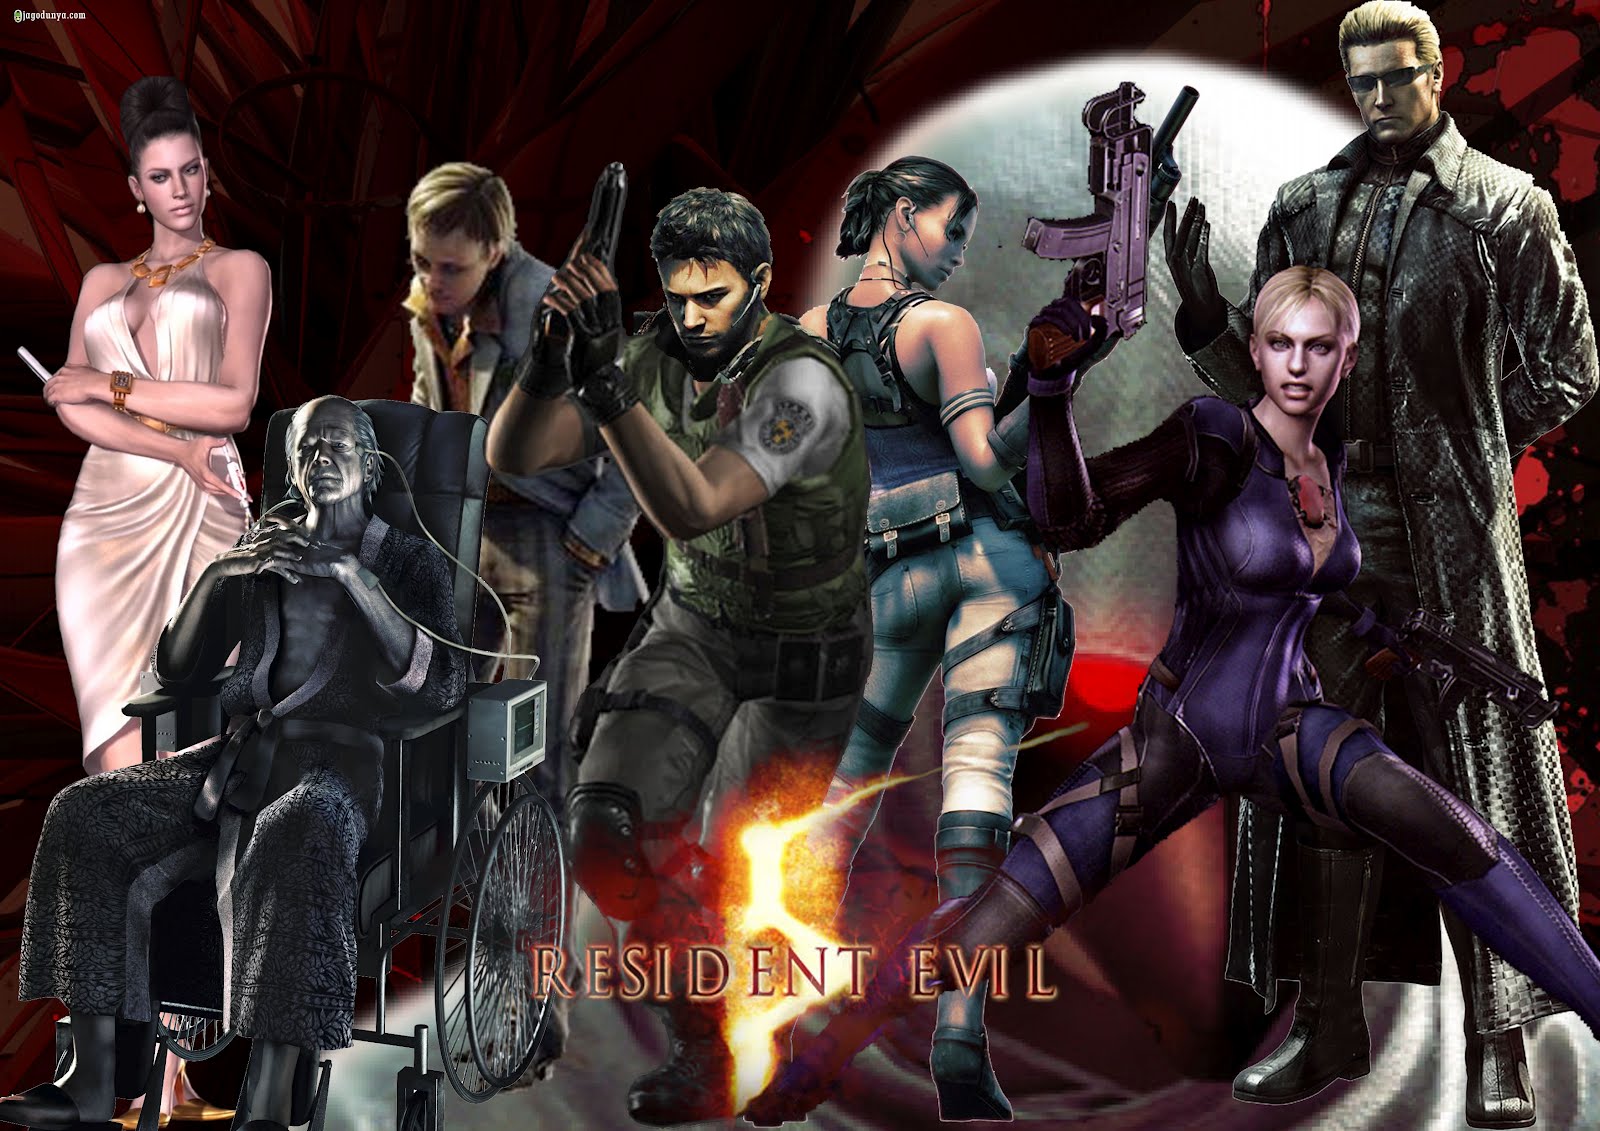 torrent download: Resident Evil 6 PC full game ^^nosTEAM^^